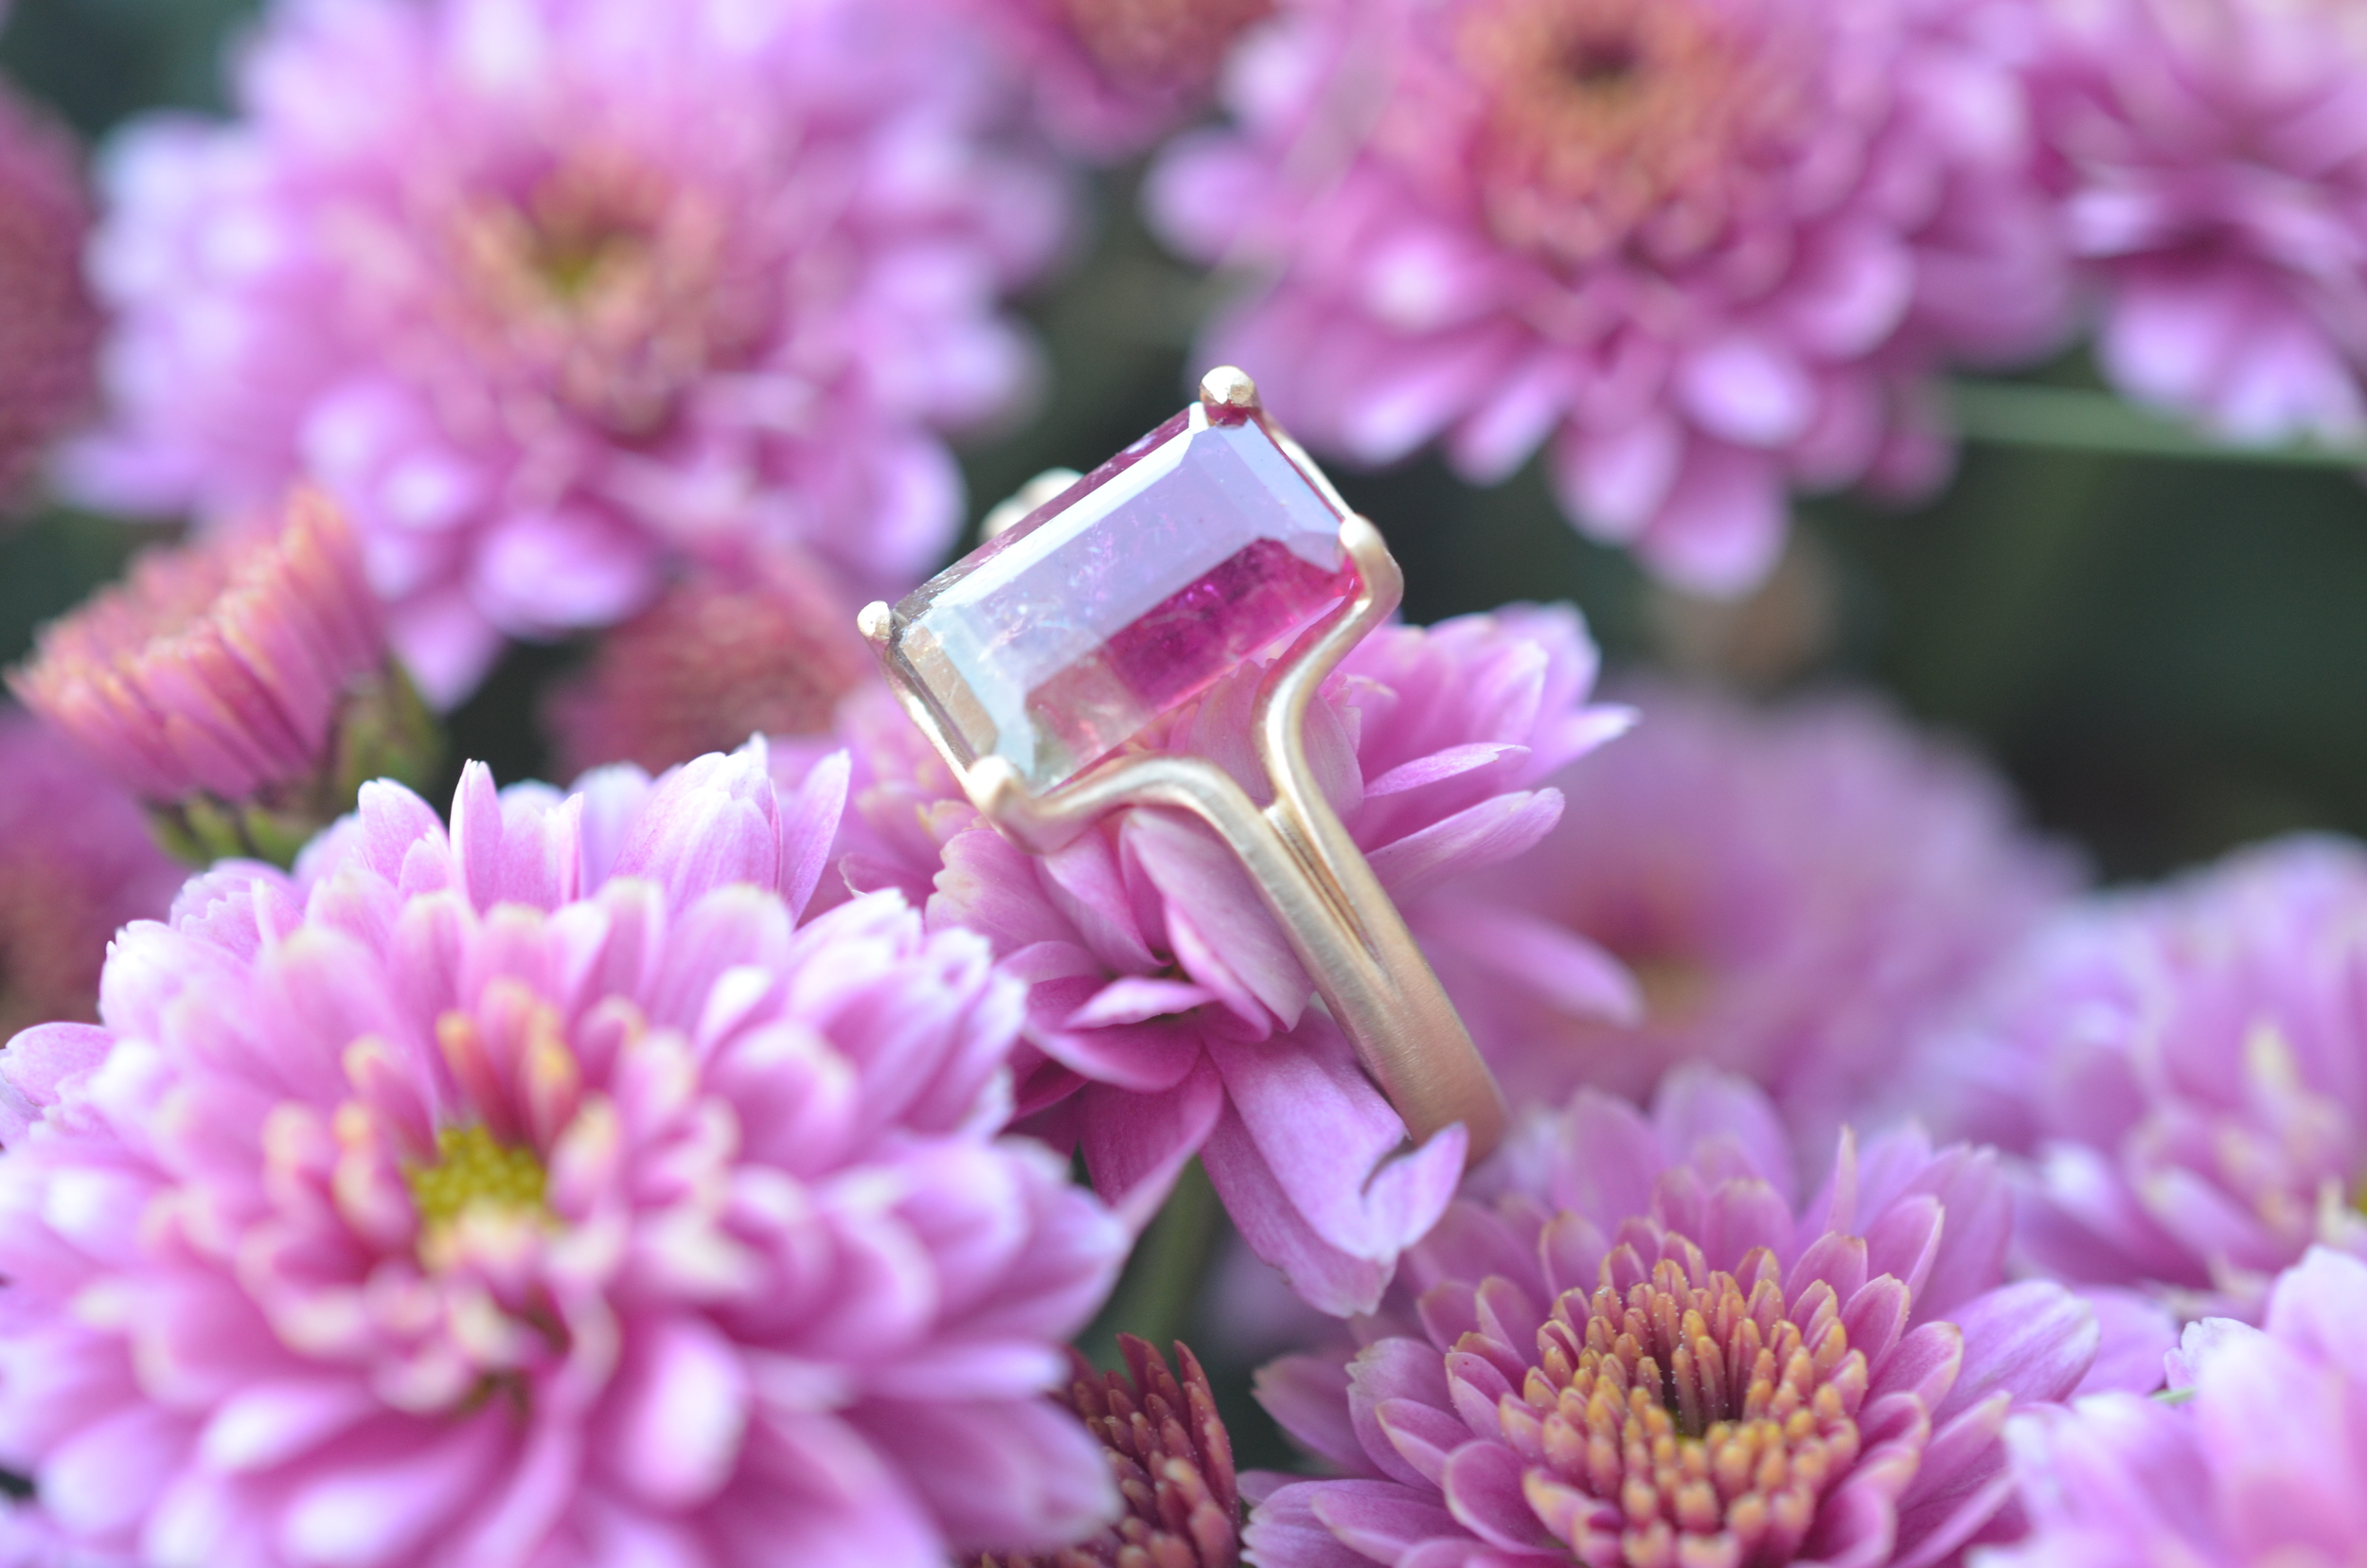 The beautiful Tourmaline ring, ready to wear!